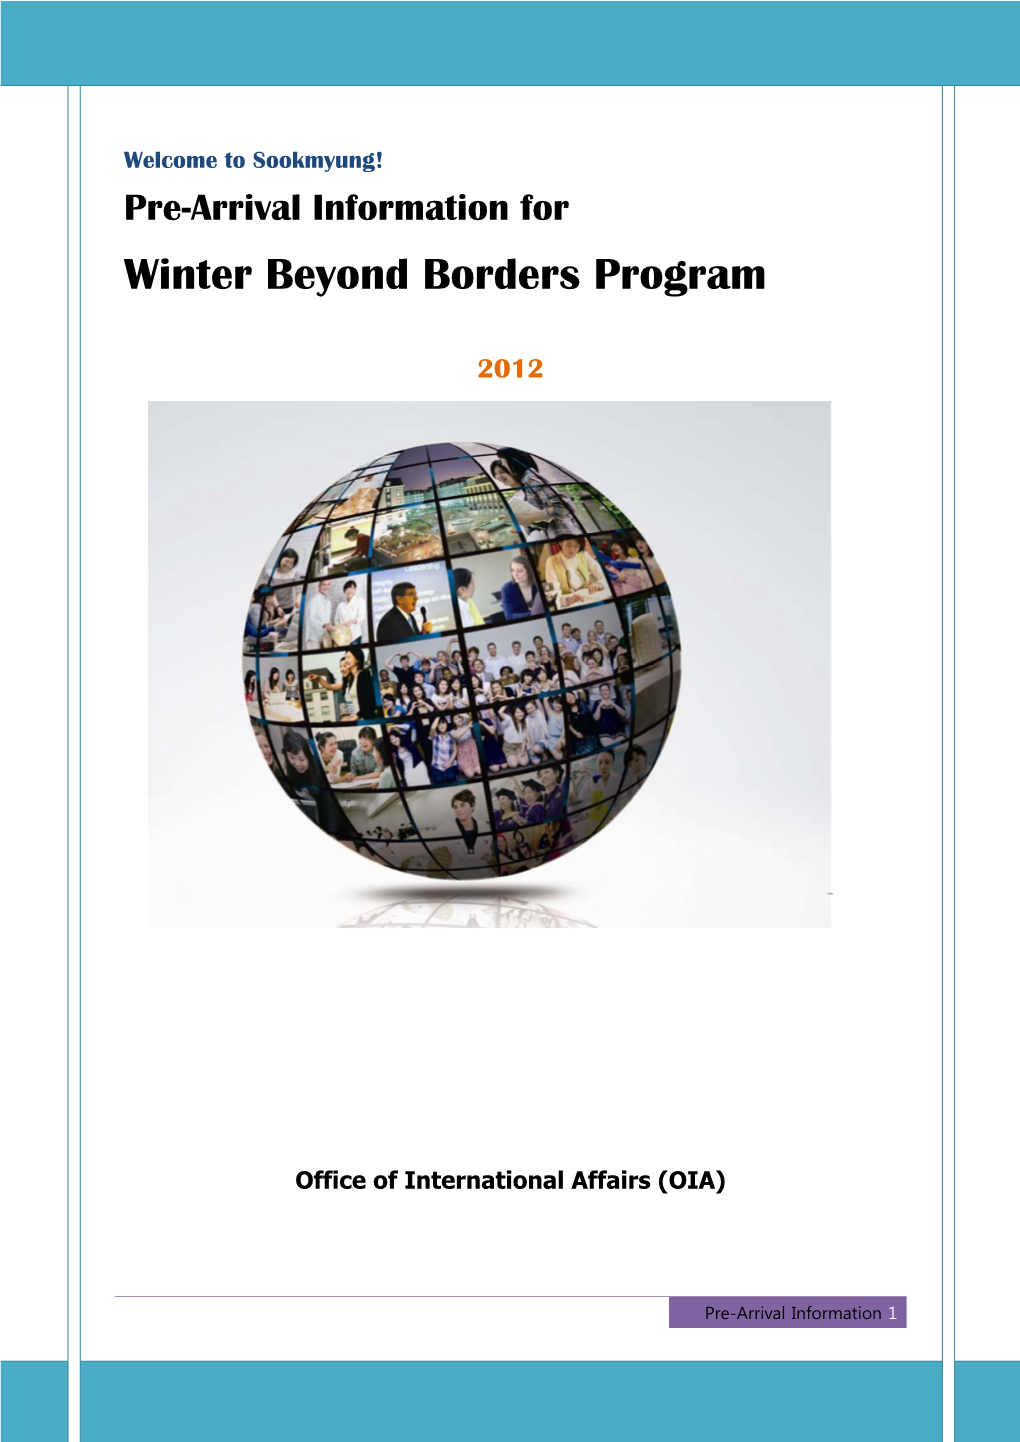 Winter Beyond Borders Program